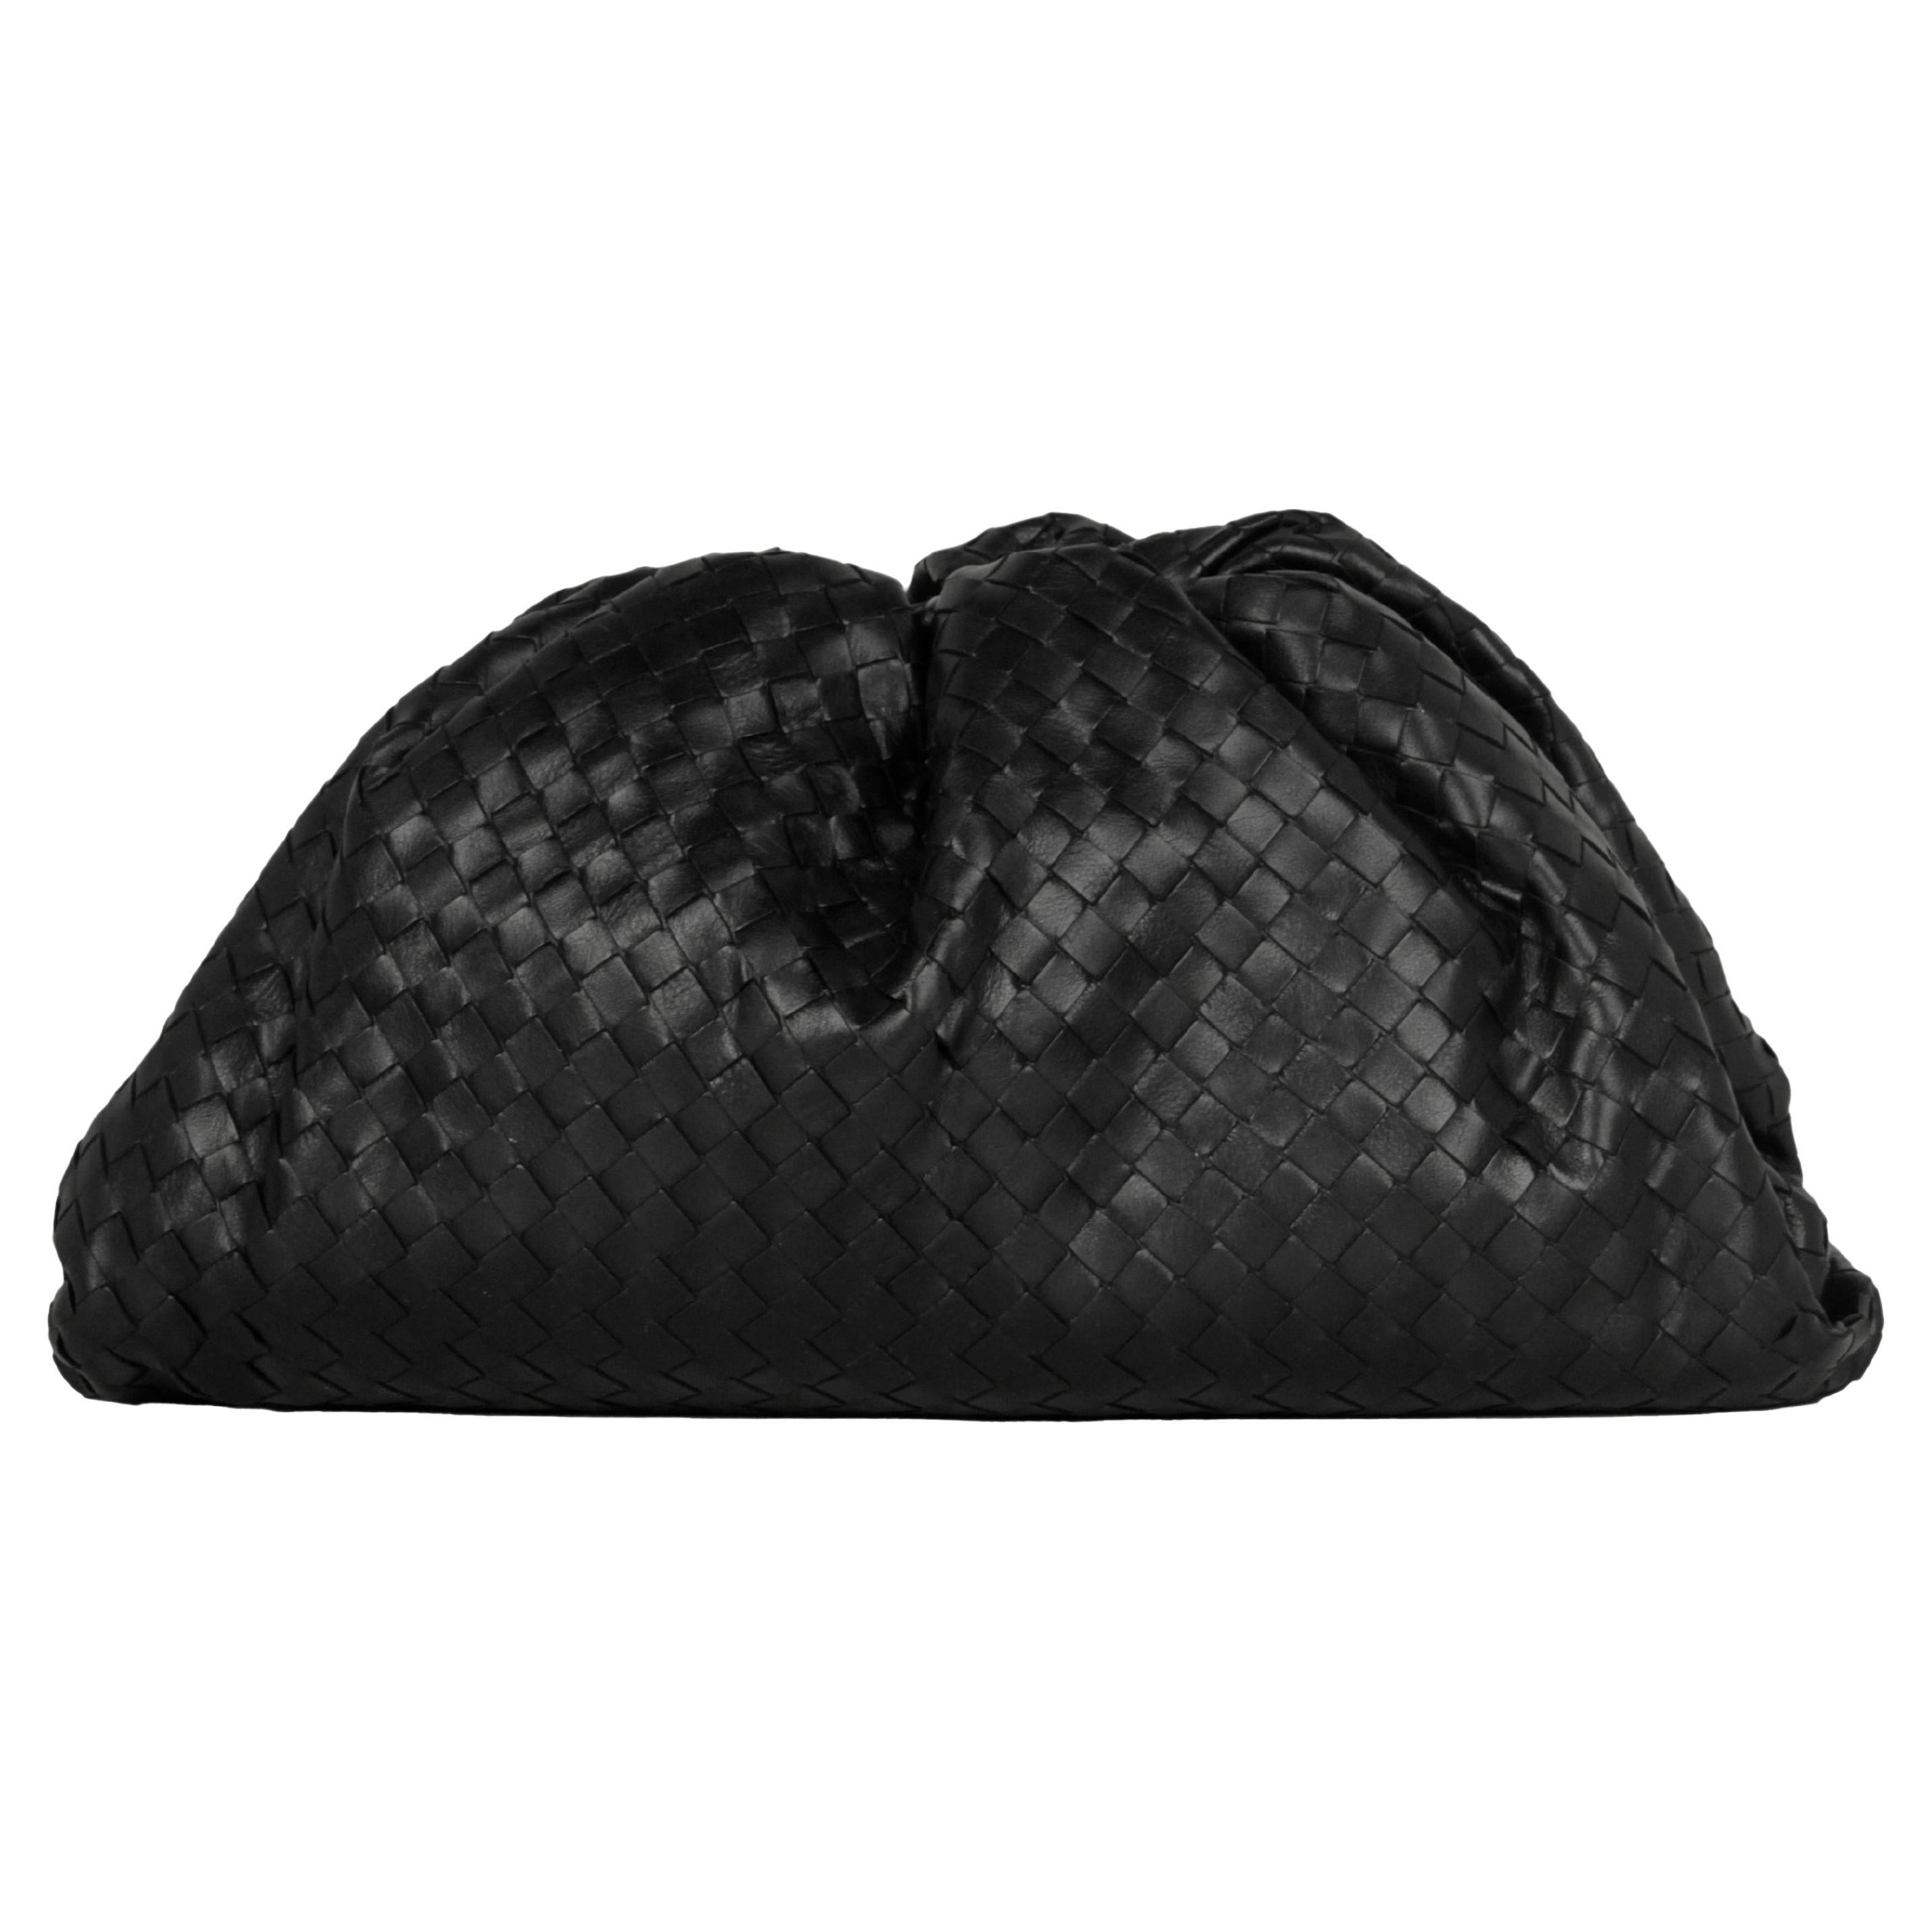 Bottega Veneta Black Intrecciato Leather The Pouch Clutch Bag rt. $3, 800